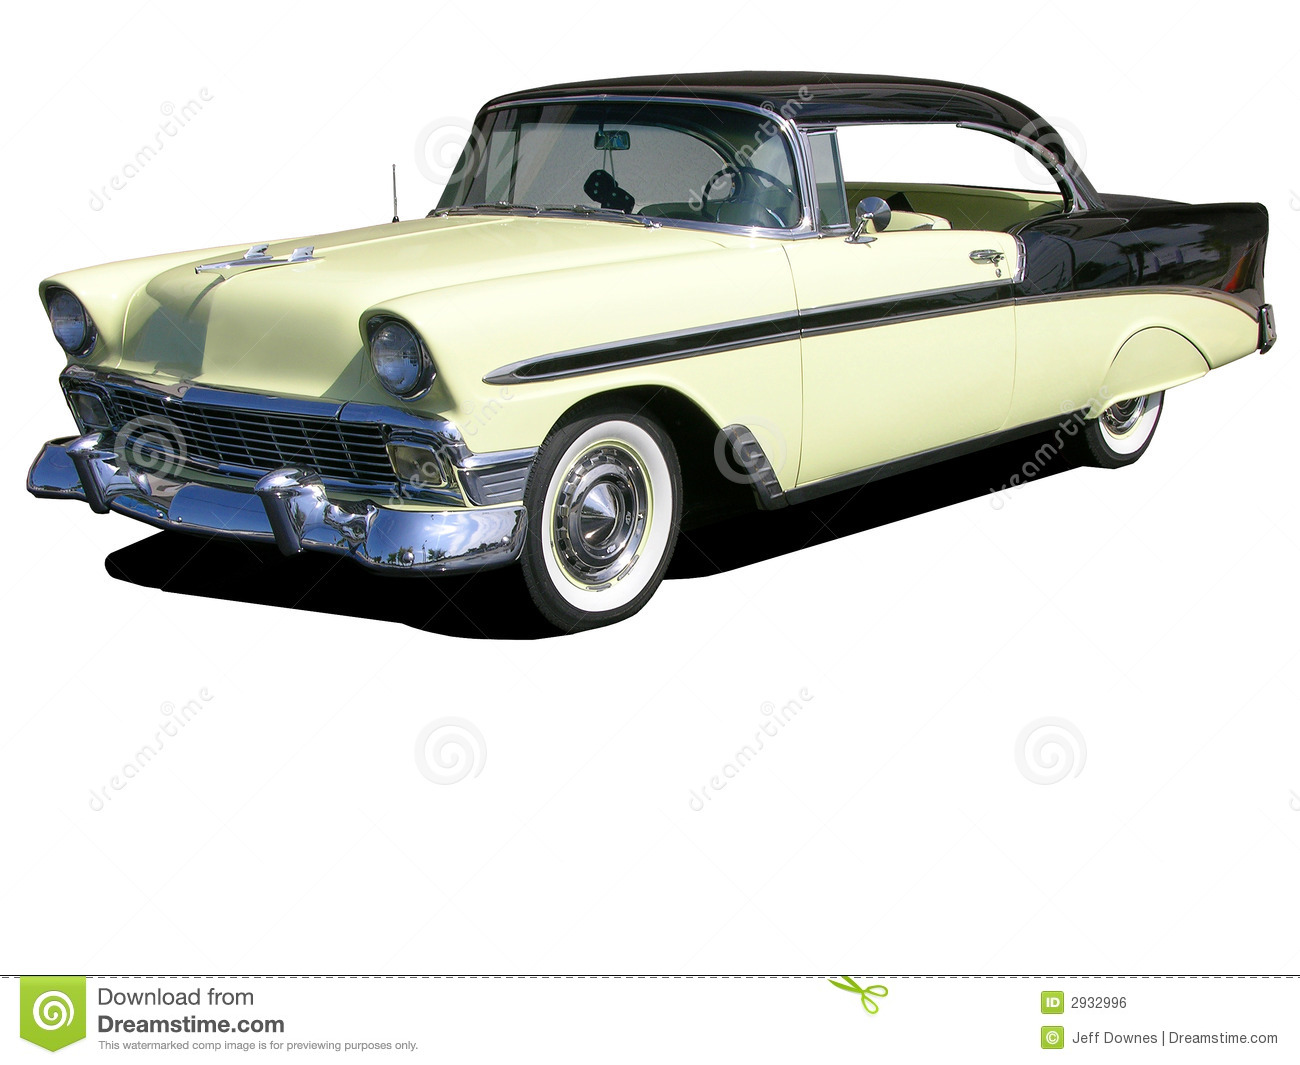 1956 Chevrolet Bel Air Royalty Free Stock Image   Image  2932996